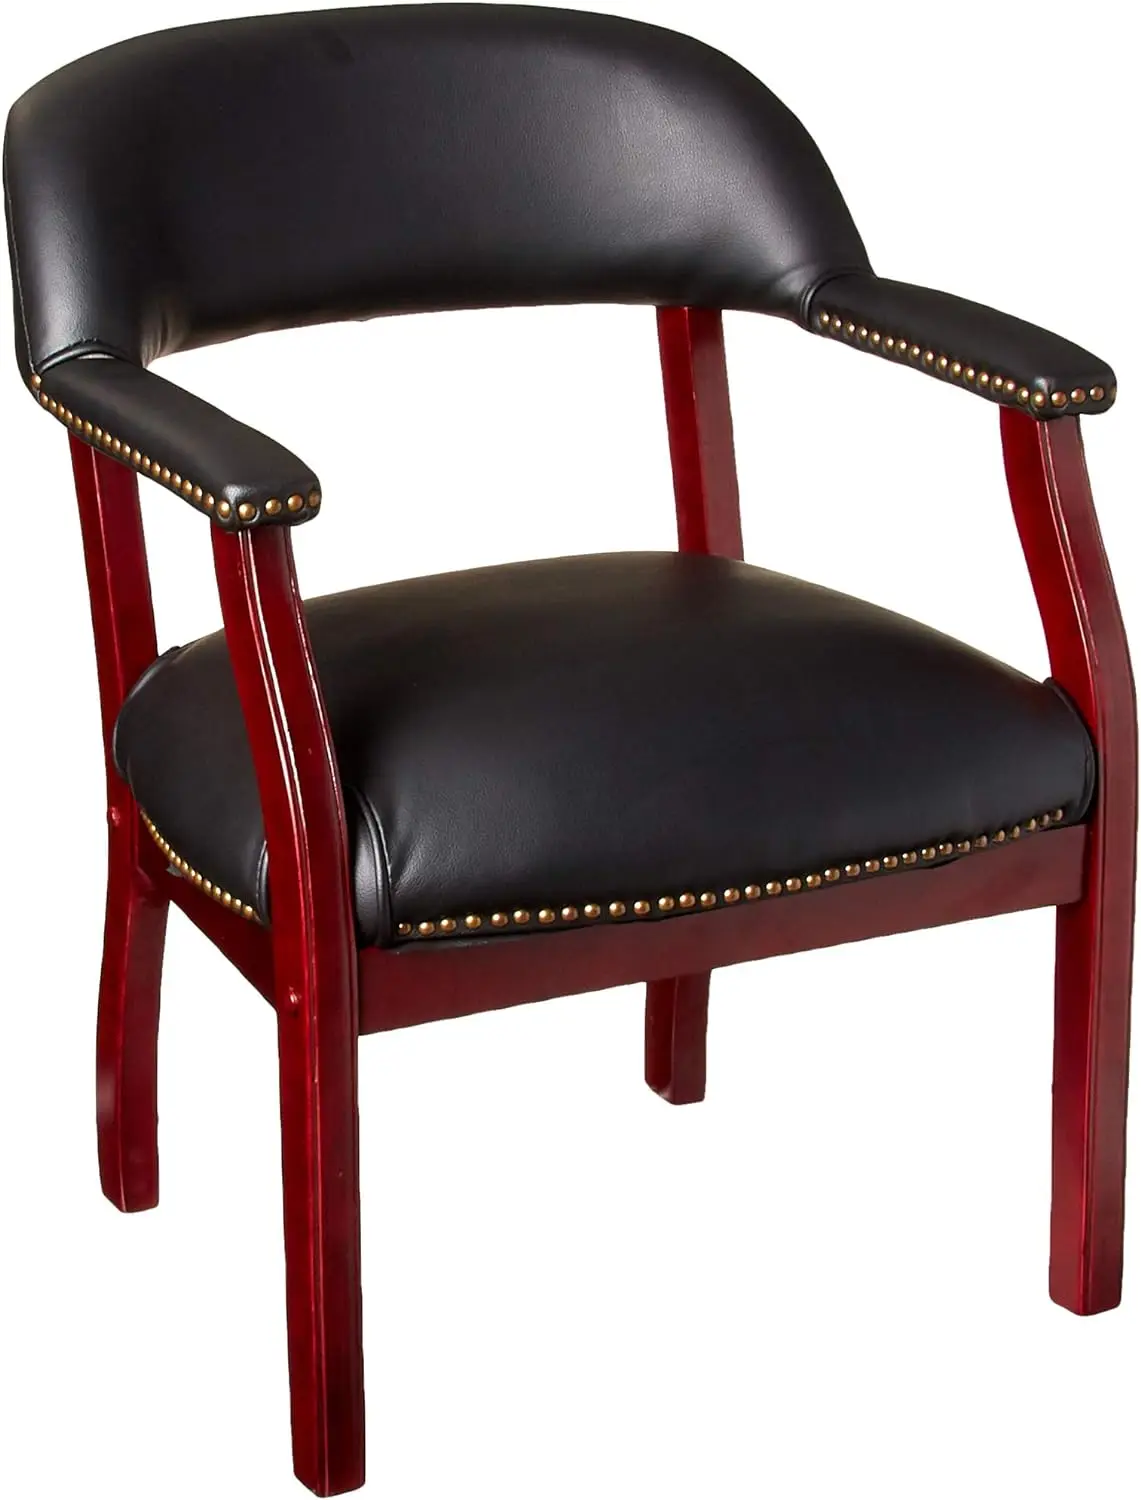 

Chair In Black Vinyl Folding chair Dinning chair Kneeling chairs Chair soft for desk Nail chair Chair pink Computer chair Chair